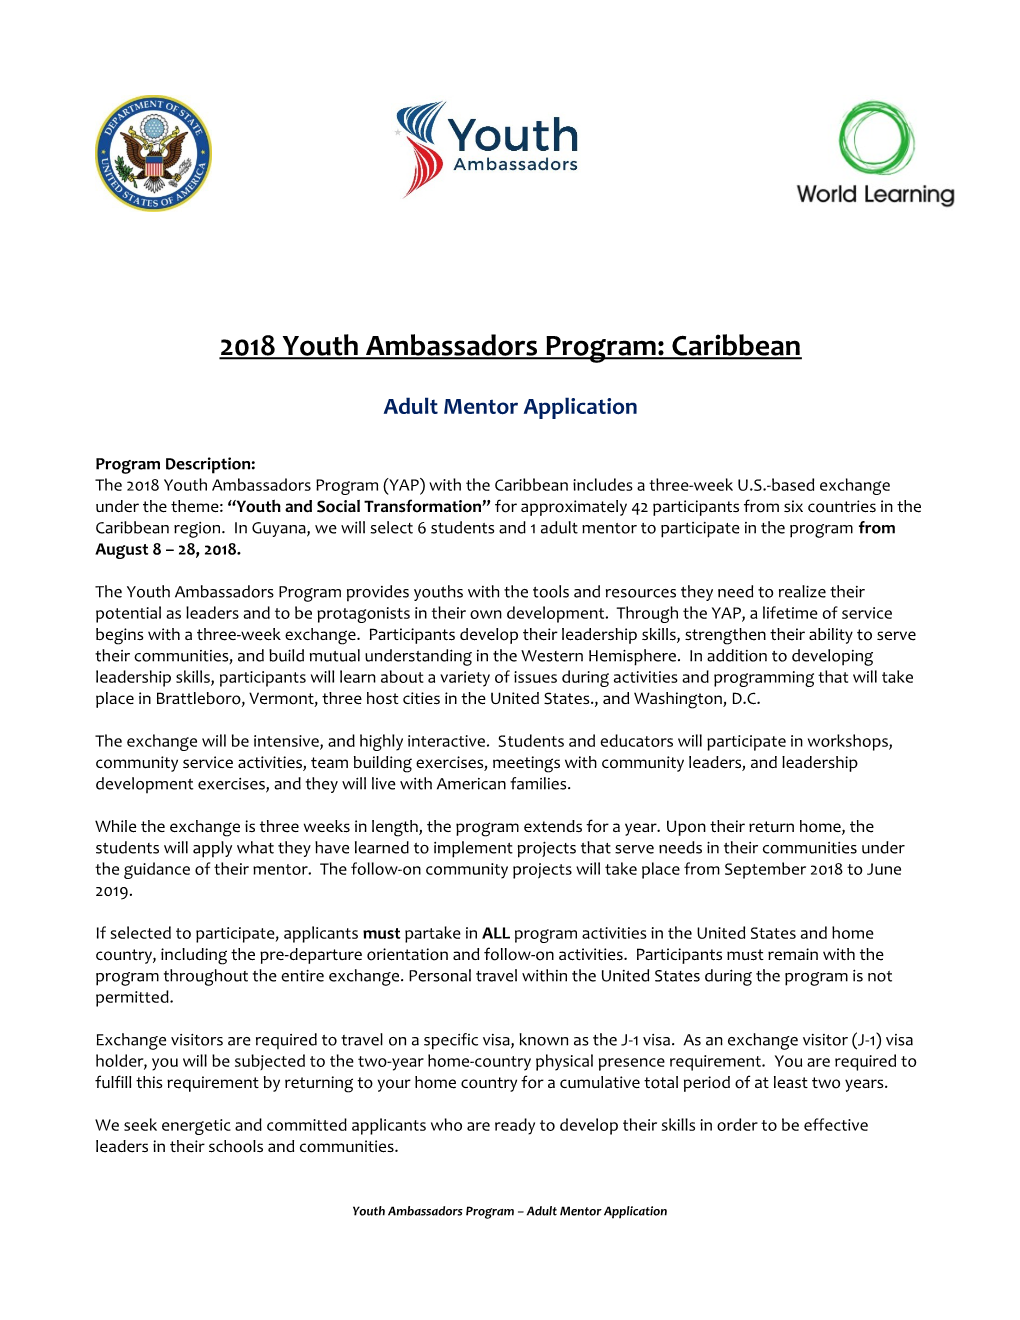 2018Youth Ambassadors Program: Caribbean